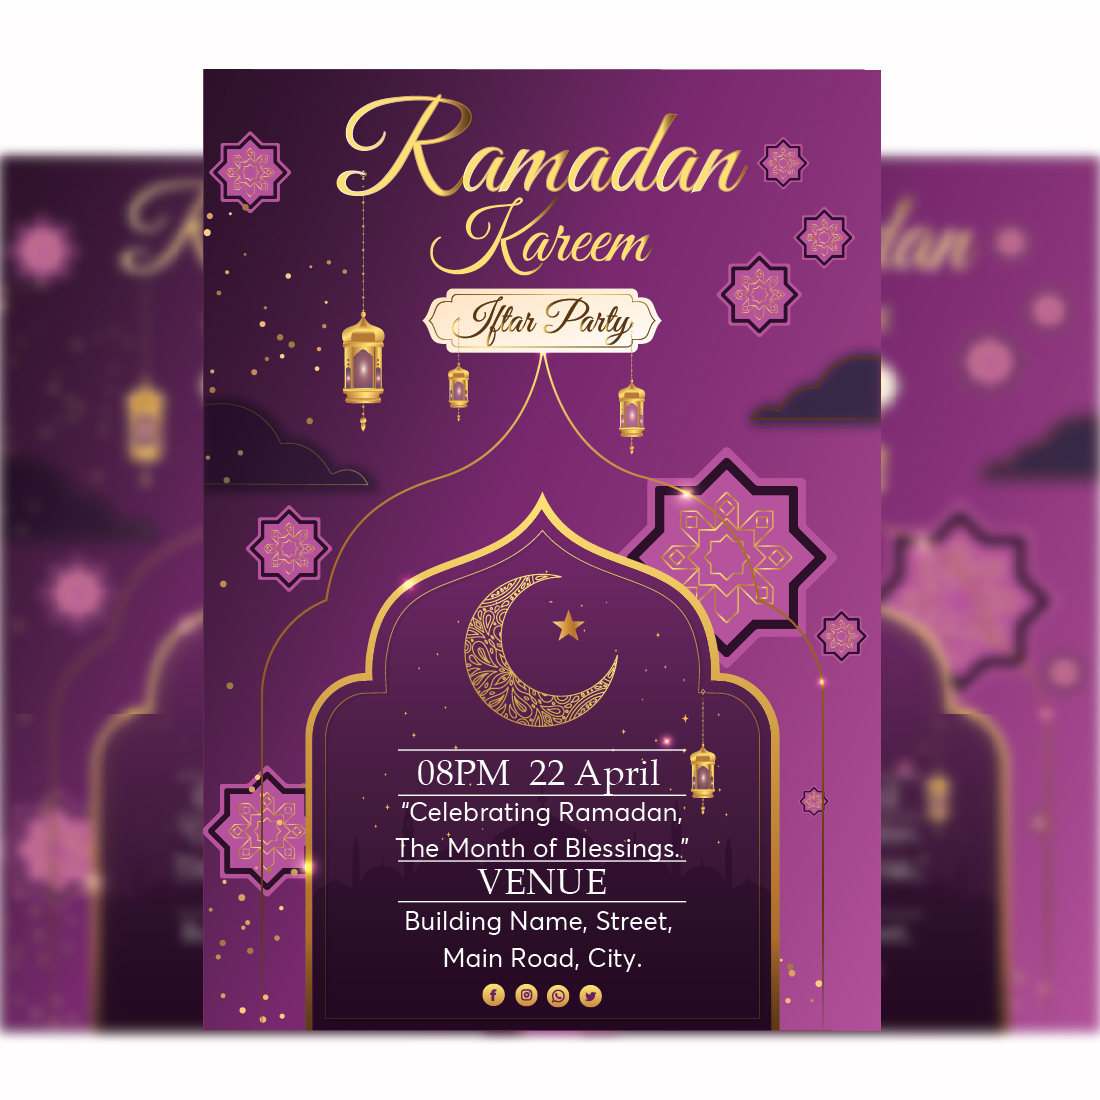 Ramadan Kareem Iftar Party Flyer cover image.